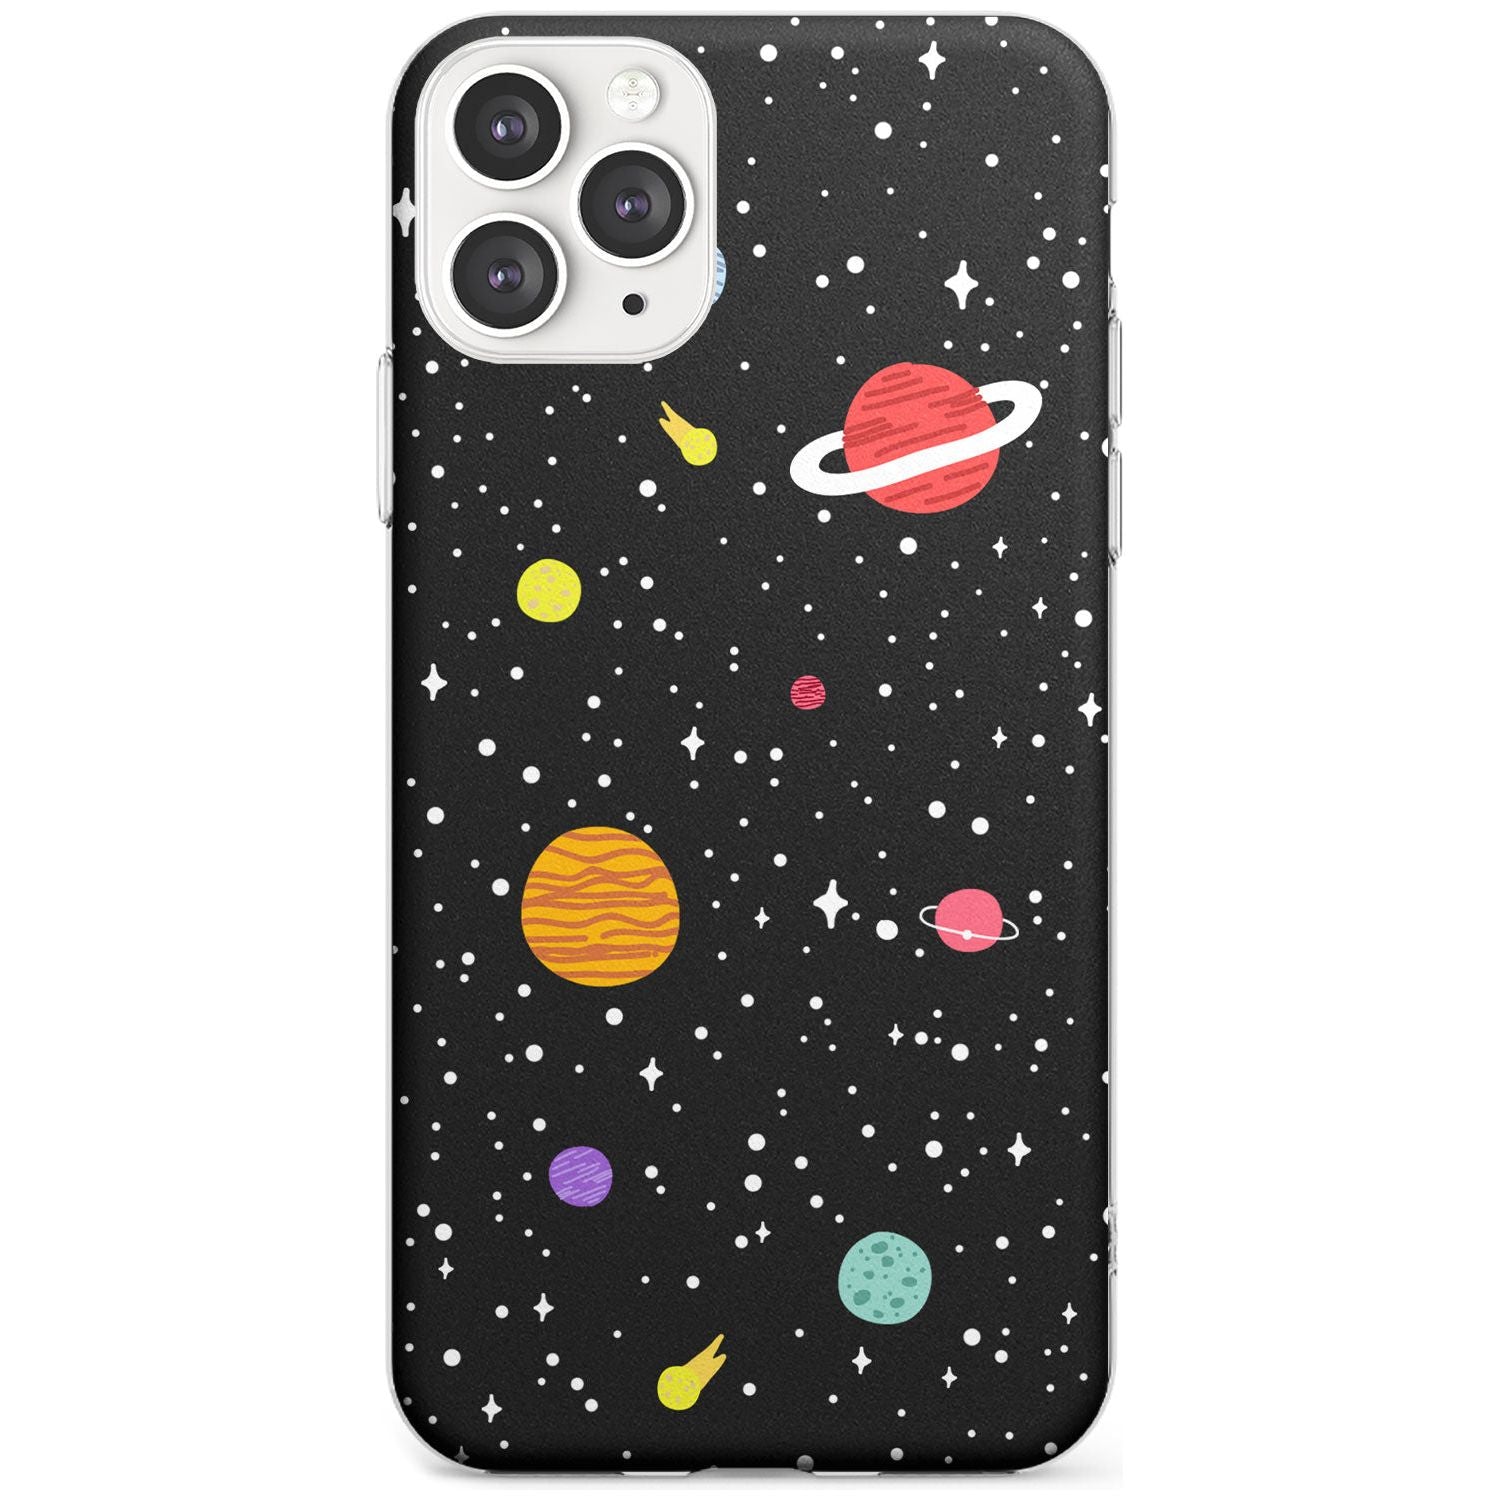 Cute Cartoon Planets Slim TPU Phone Case for iPhone 11 Pro Max